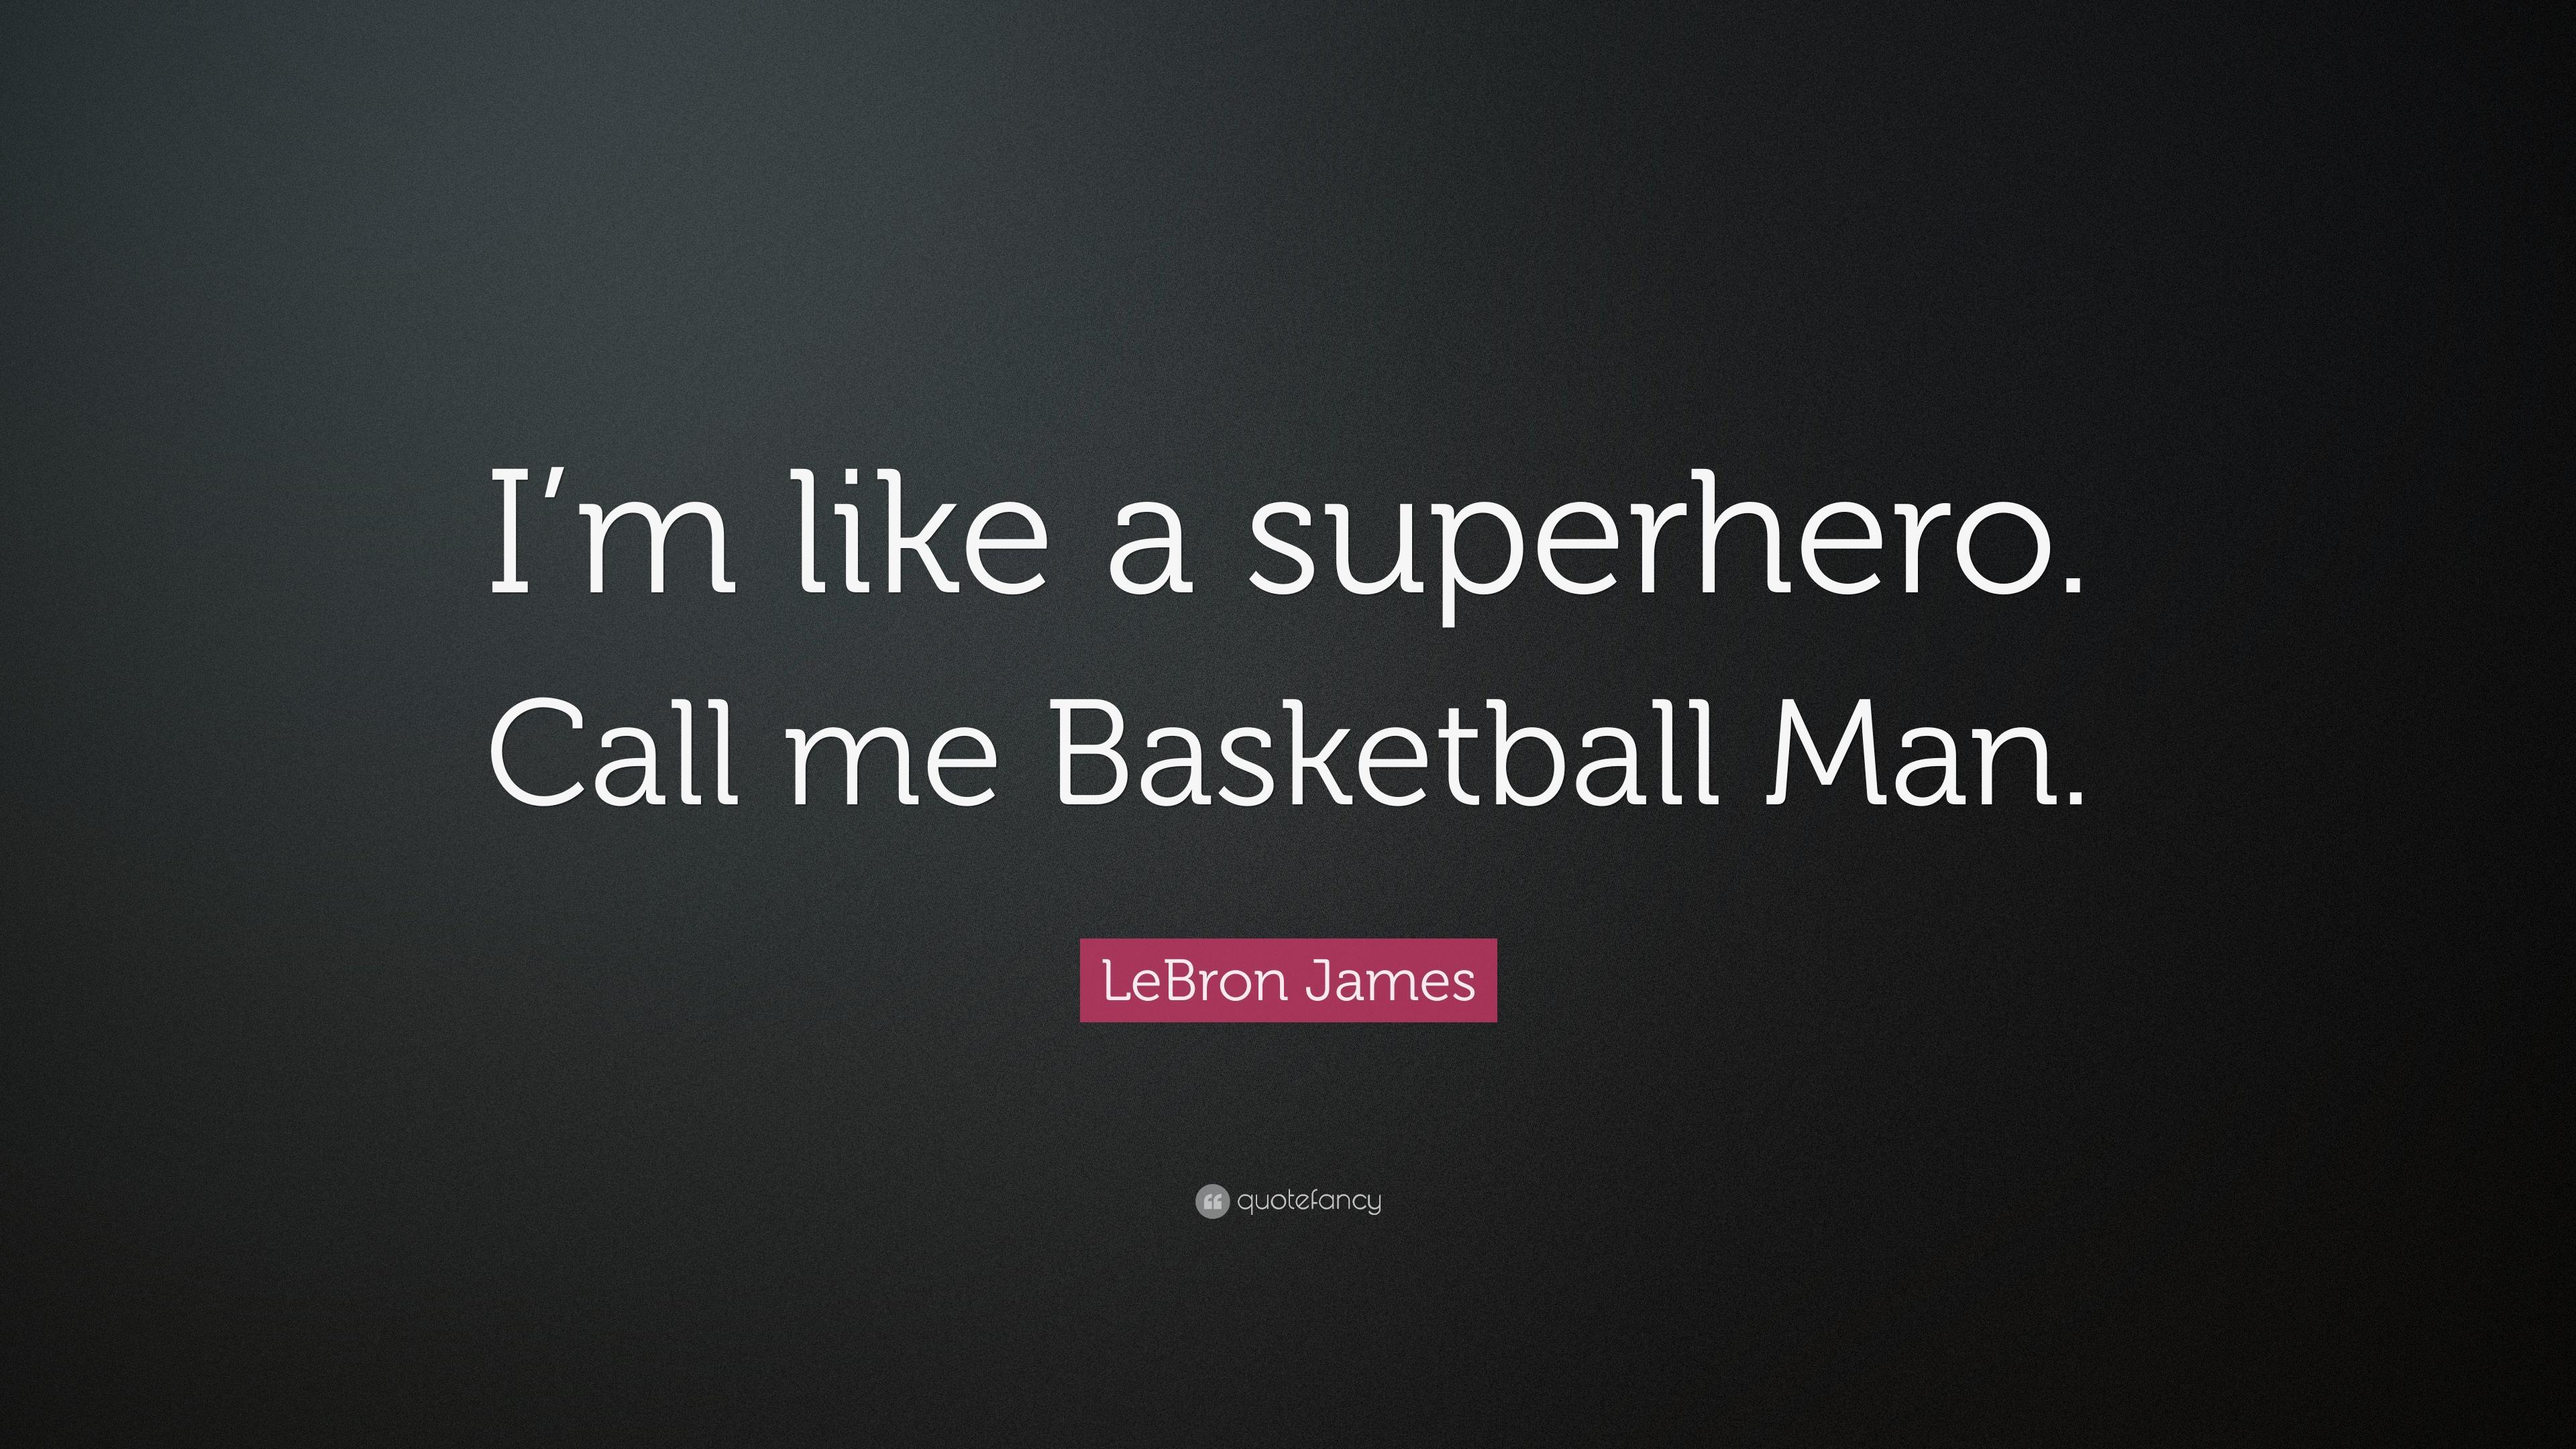 LeBron James Quote: “I'm like a superhero. Call me Basketball Man